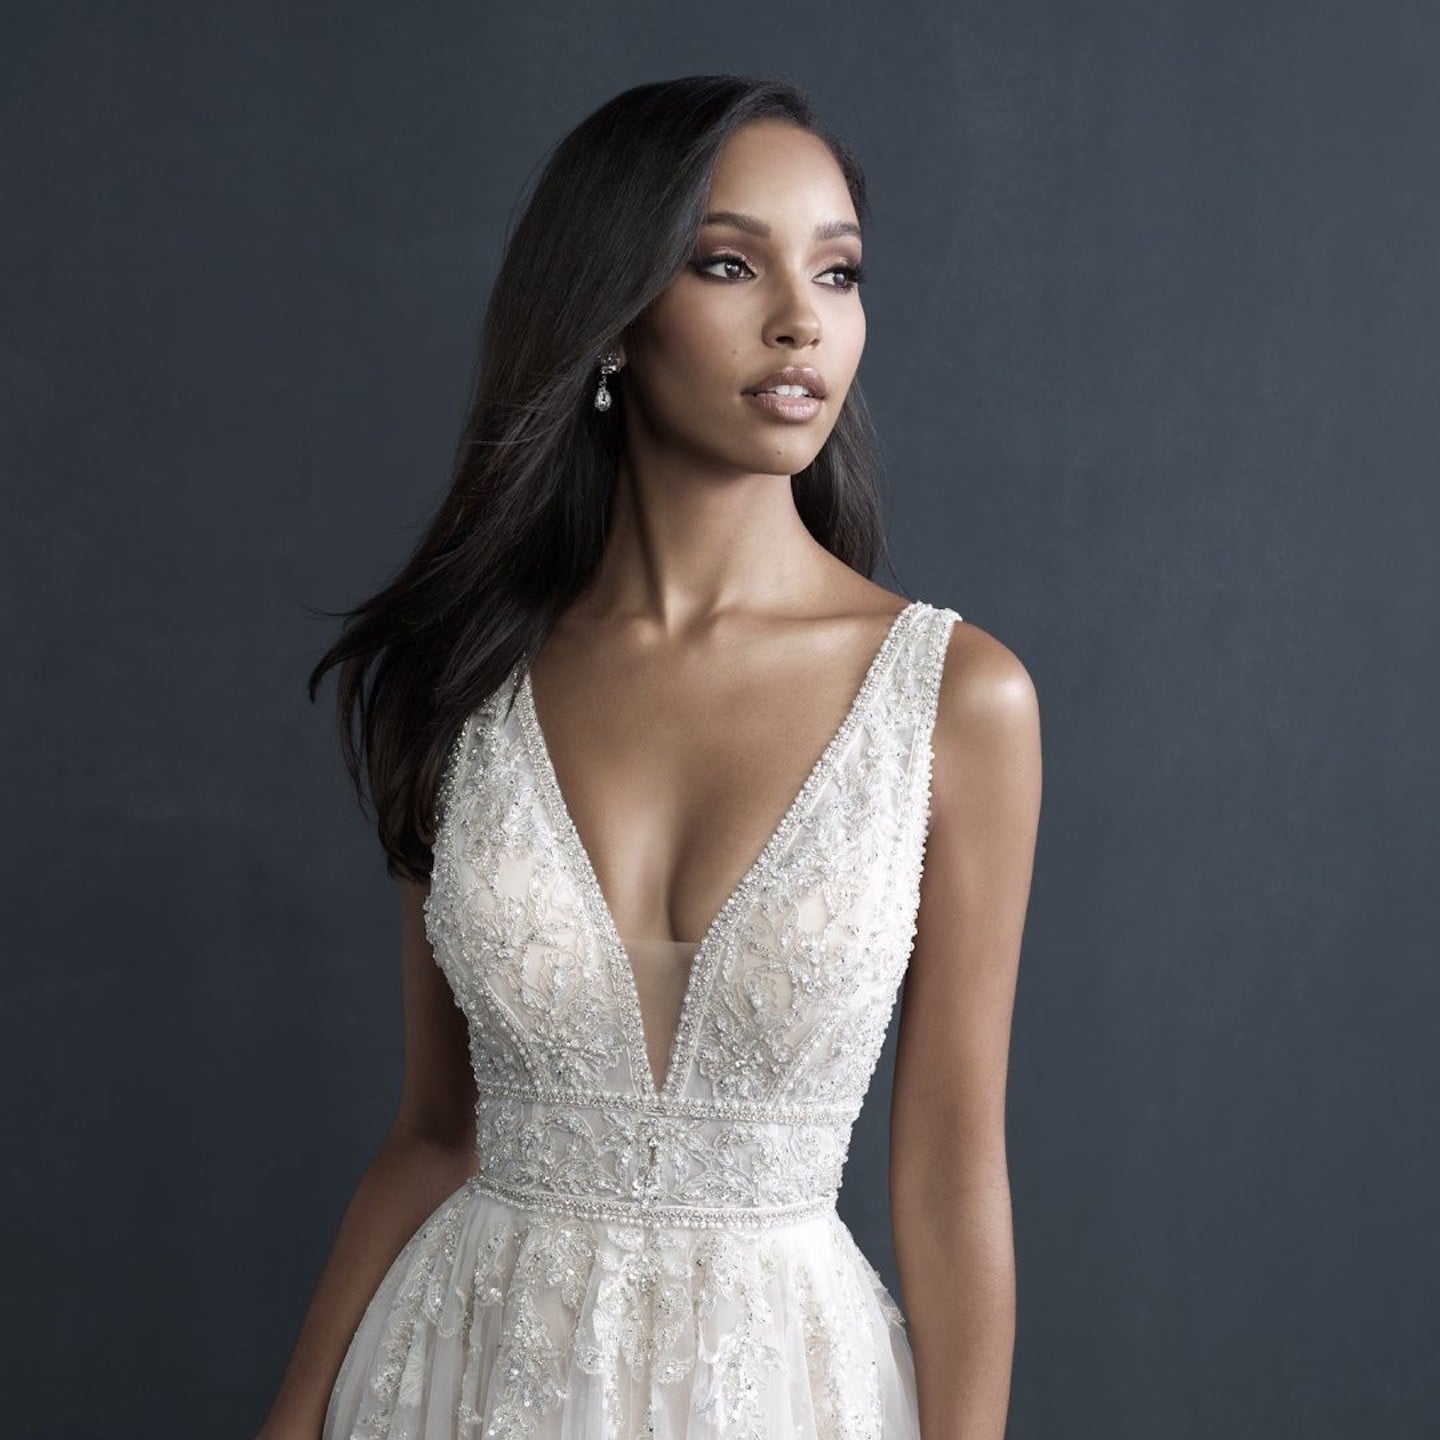 Details more than 168 elegant wedding gown designs best